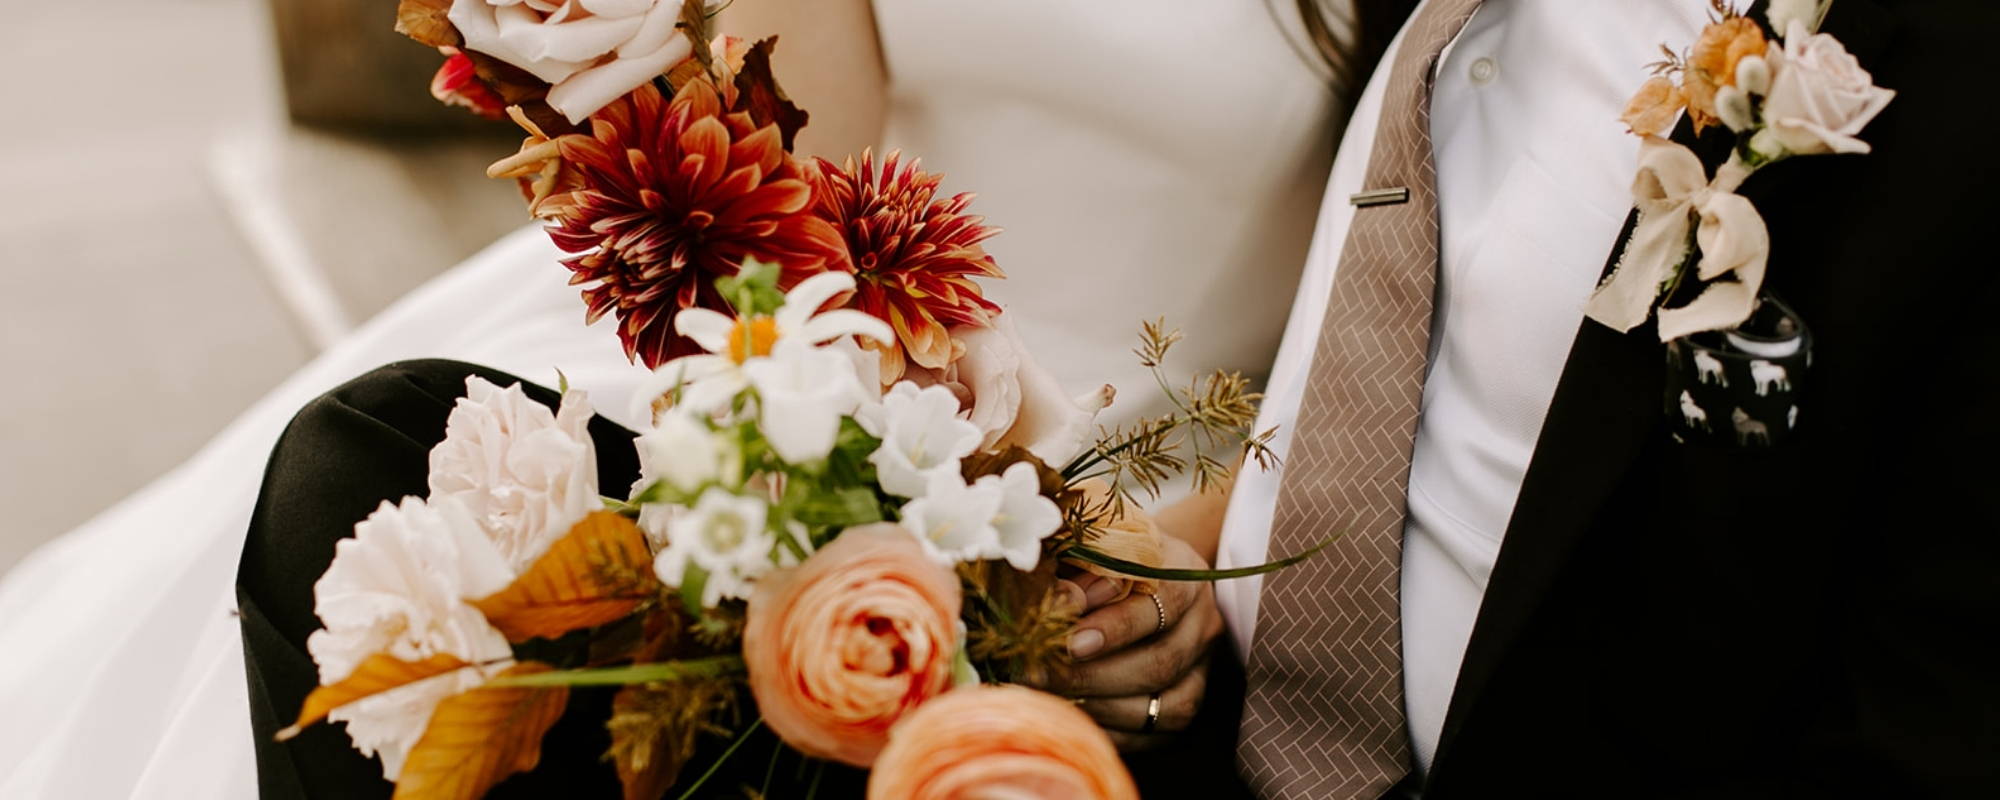 8 Inspirational Fall Wedding Plan Ideas